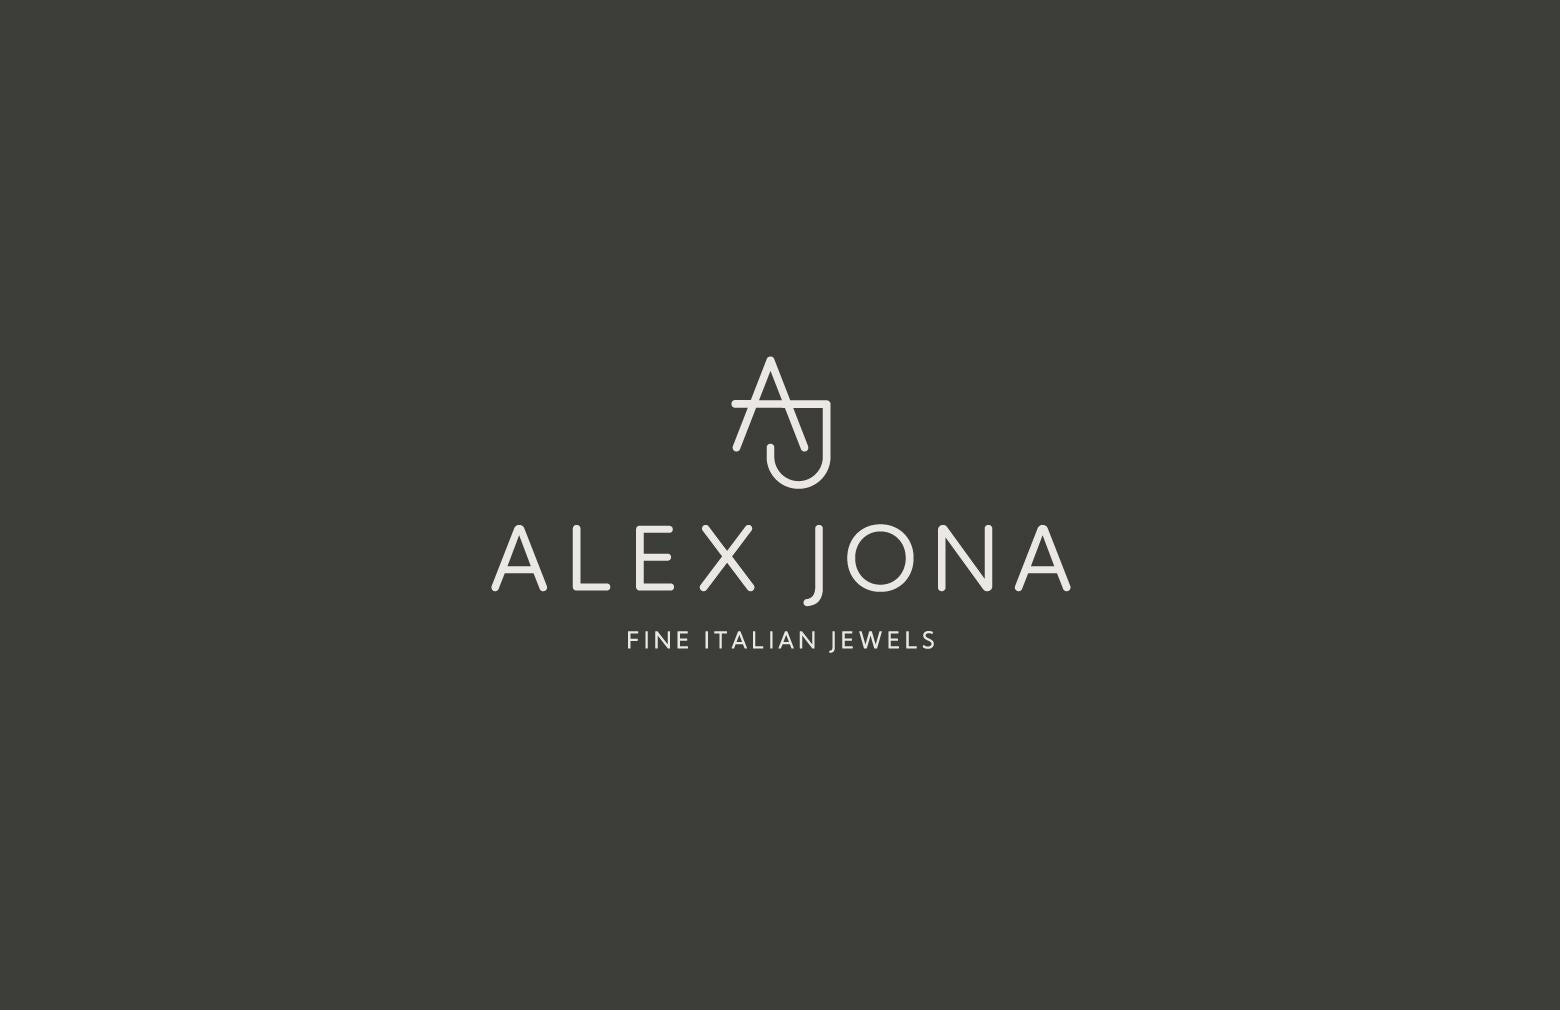 Alex Jona Onyx Sterling Silver Cufflinks 4